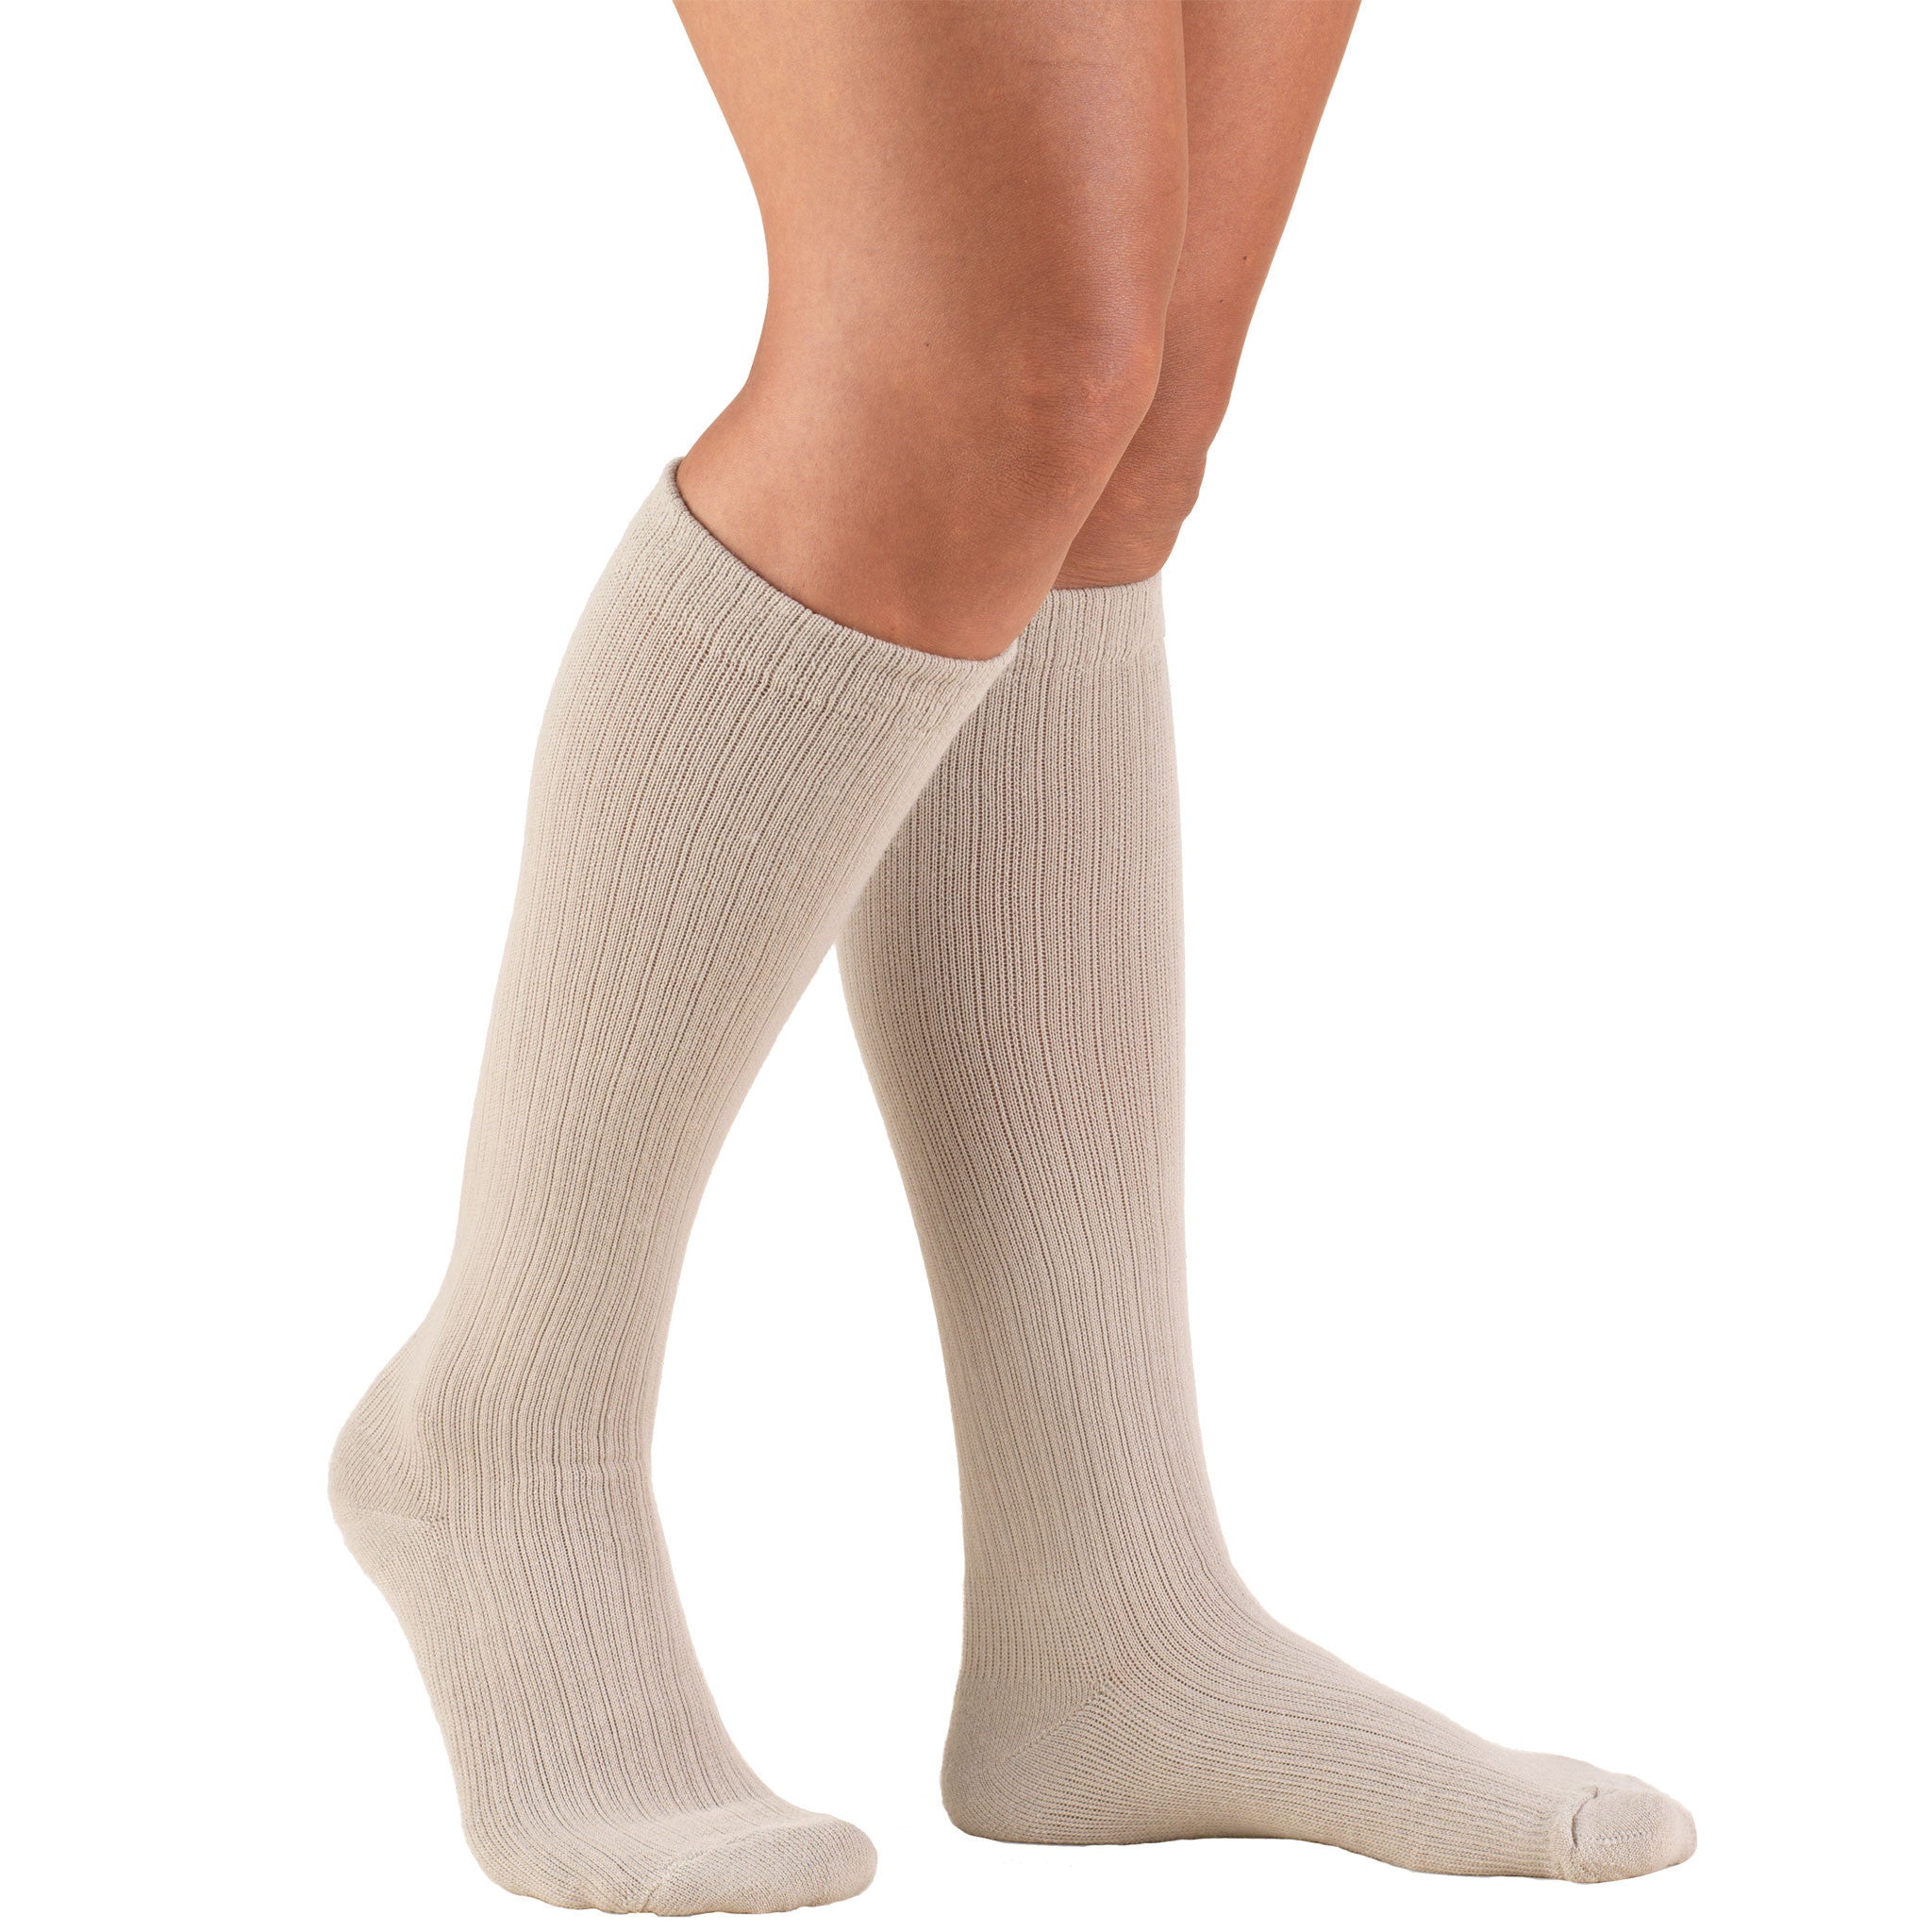 TruForm Classic Medical Knee High Compression Stockings 20-30mmHg